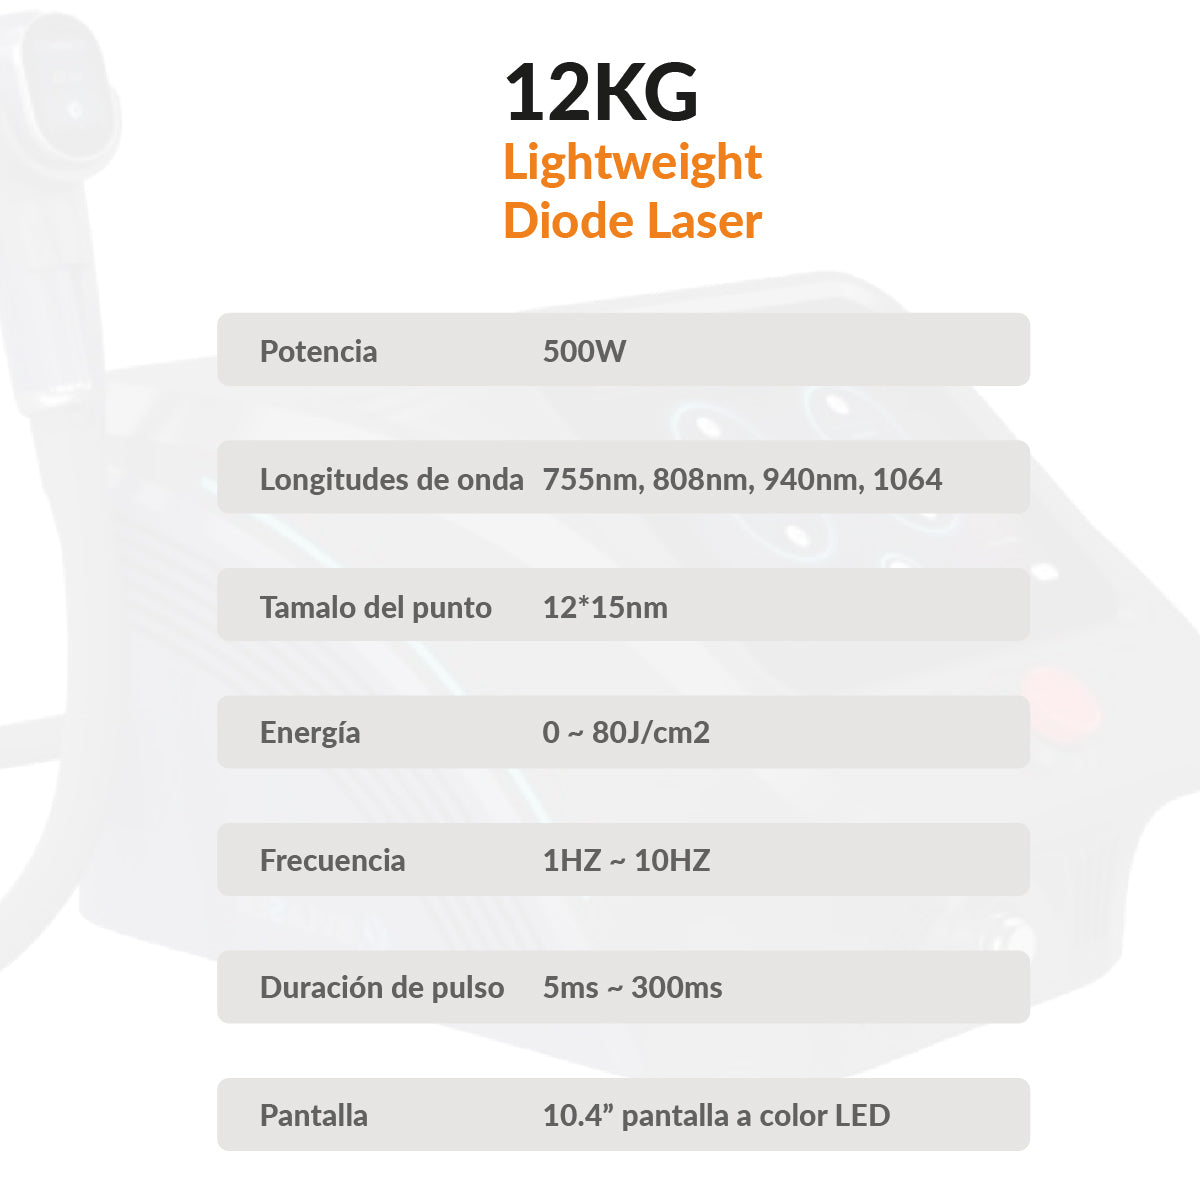 12KG Lightweight Diode Laser